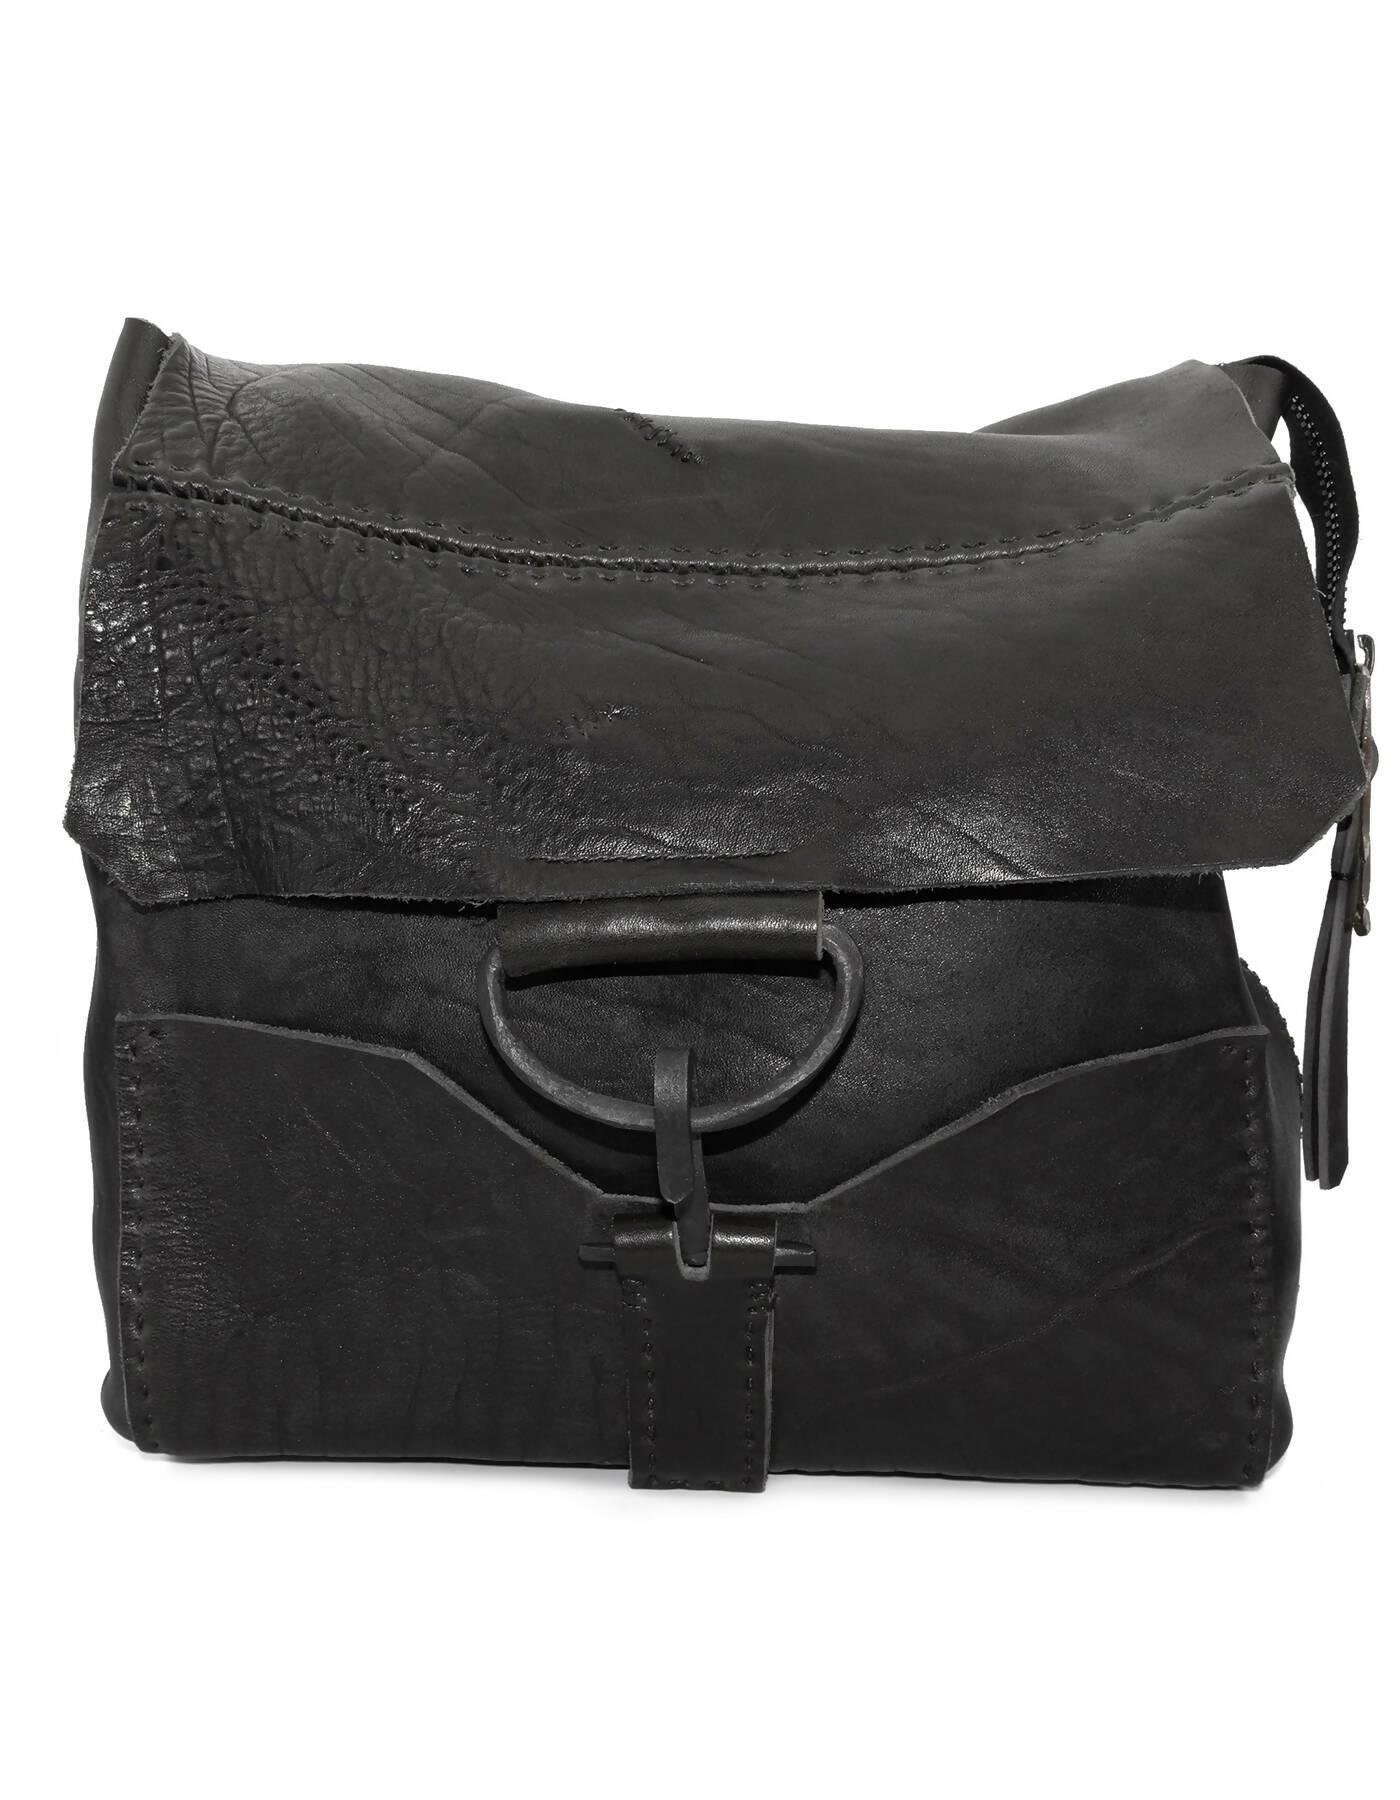 black horse culatta leather hybrid backpack by ATELIER SKN